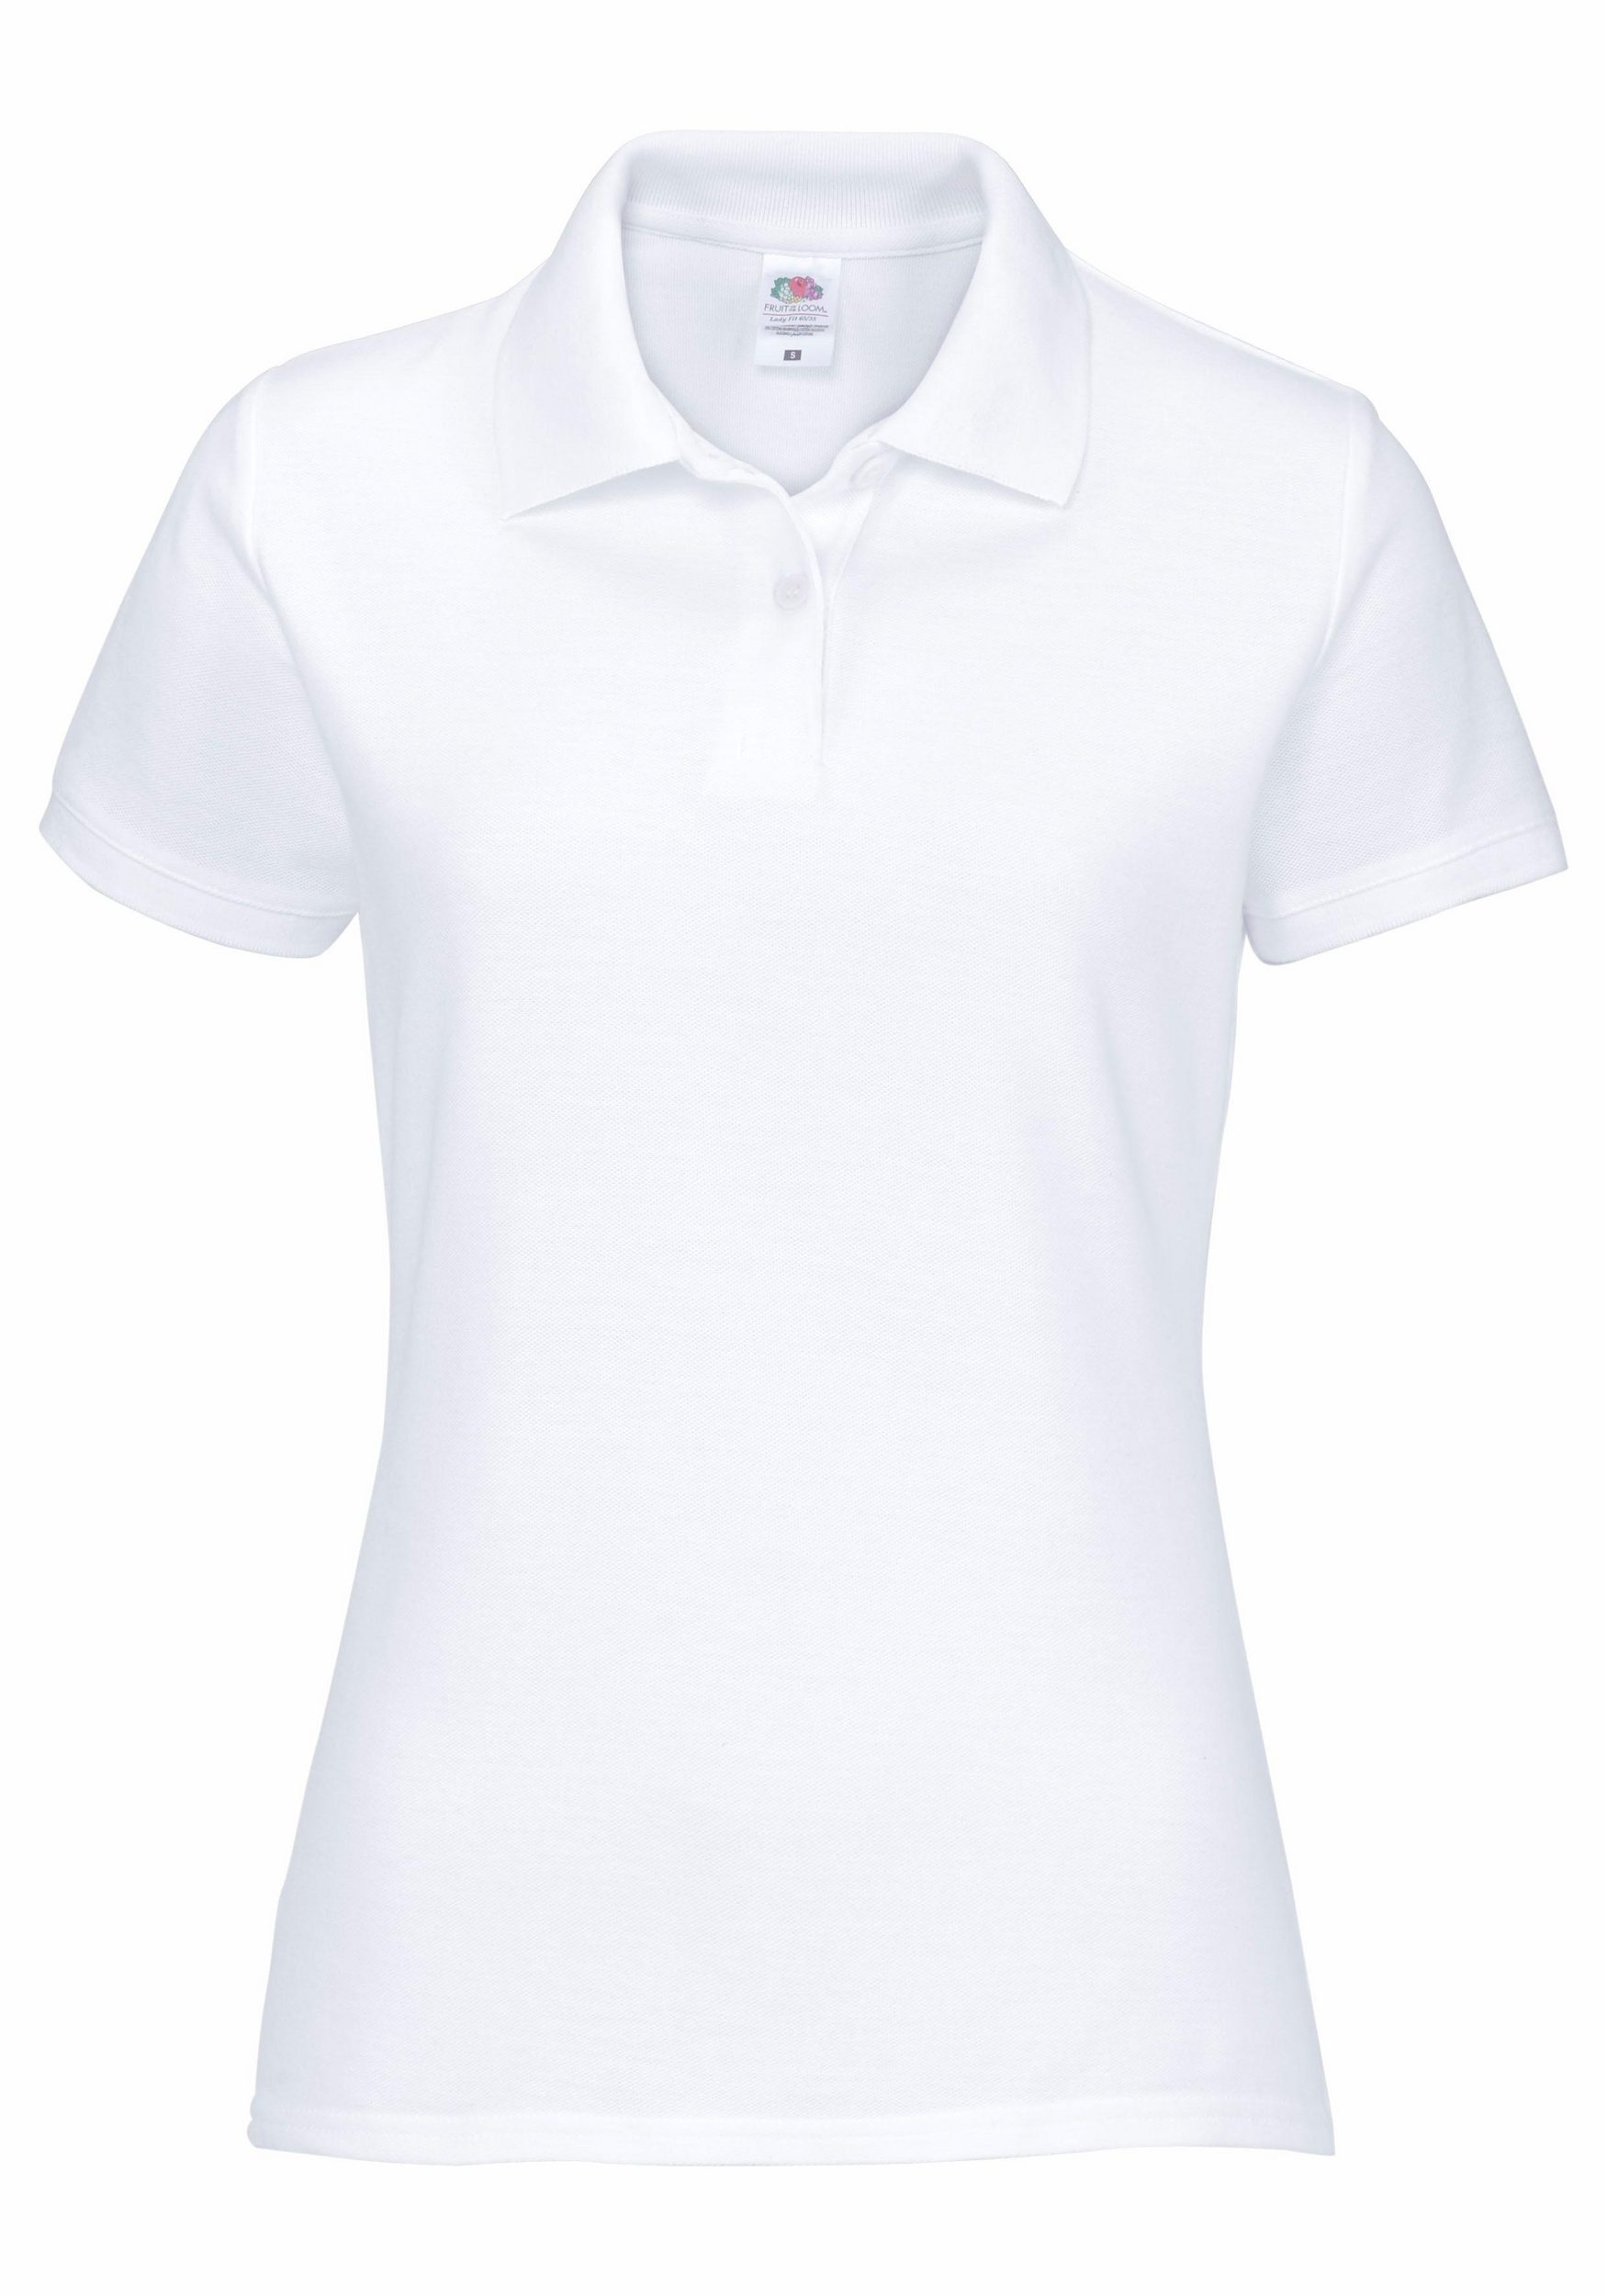 Ladies Women Polo Shirts Cotton Premium Lady Fit Polos Tops Shirts ...